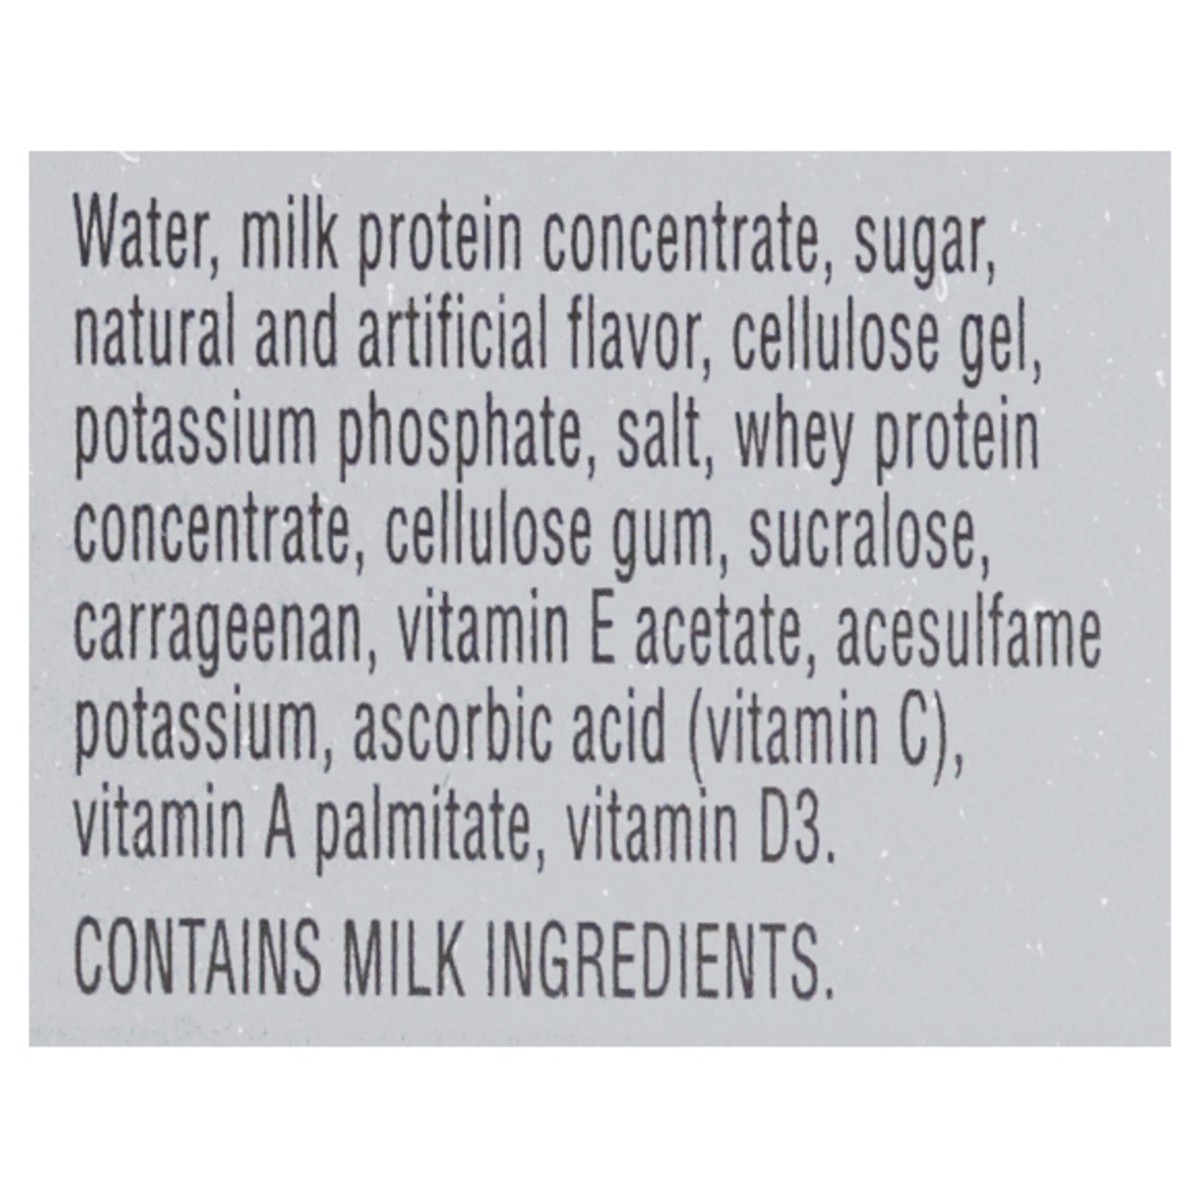 Gatorade Super Shake Protein Shake With Nutrients Vanilla